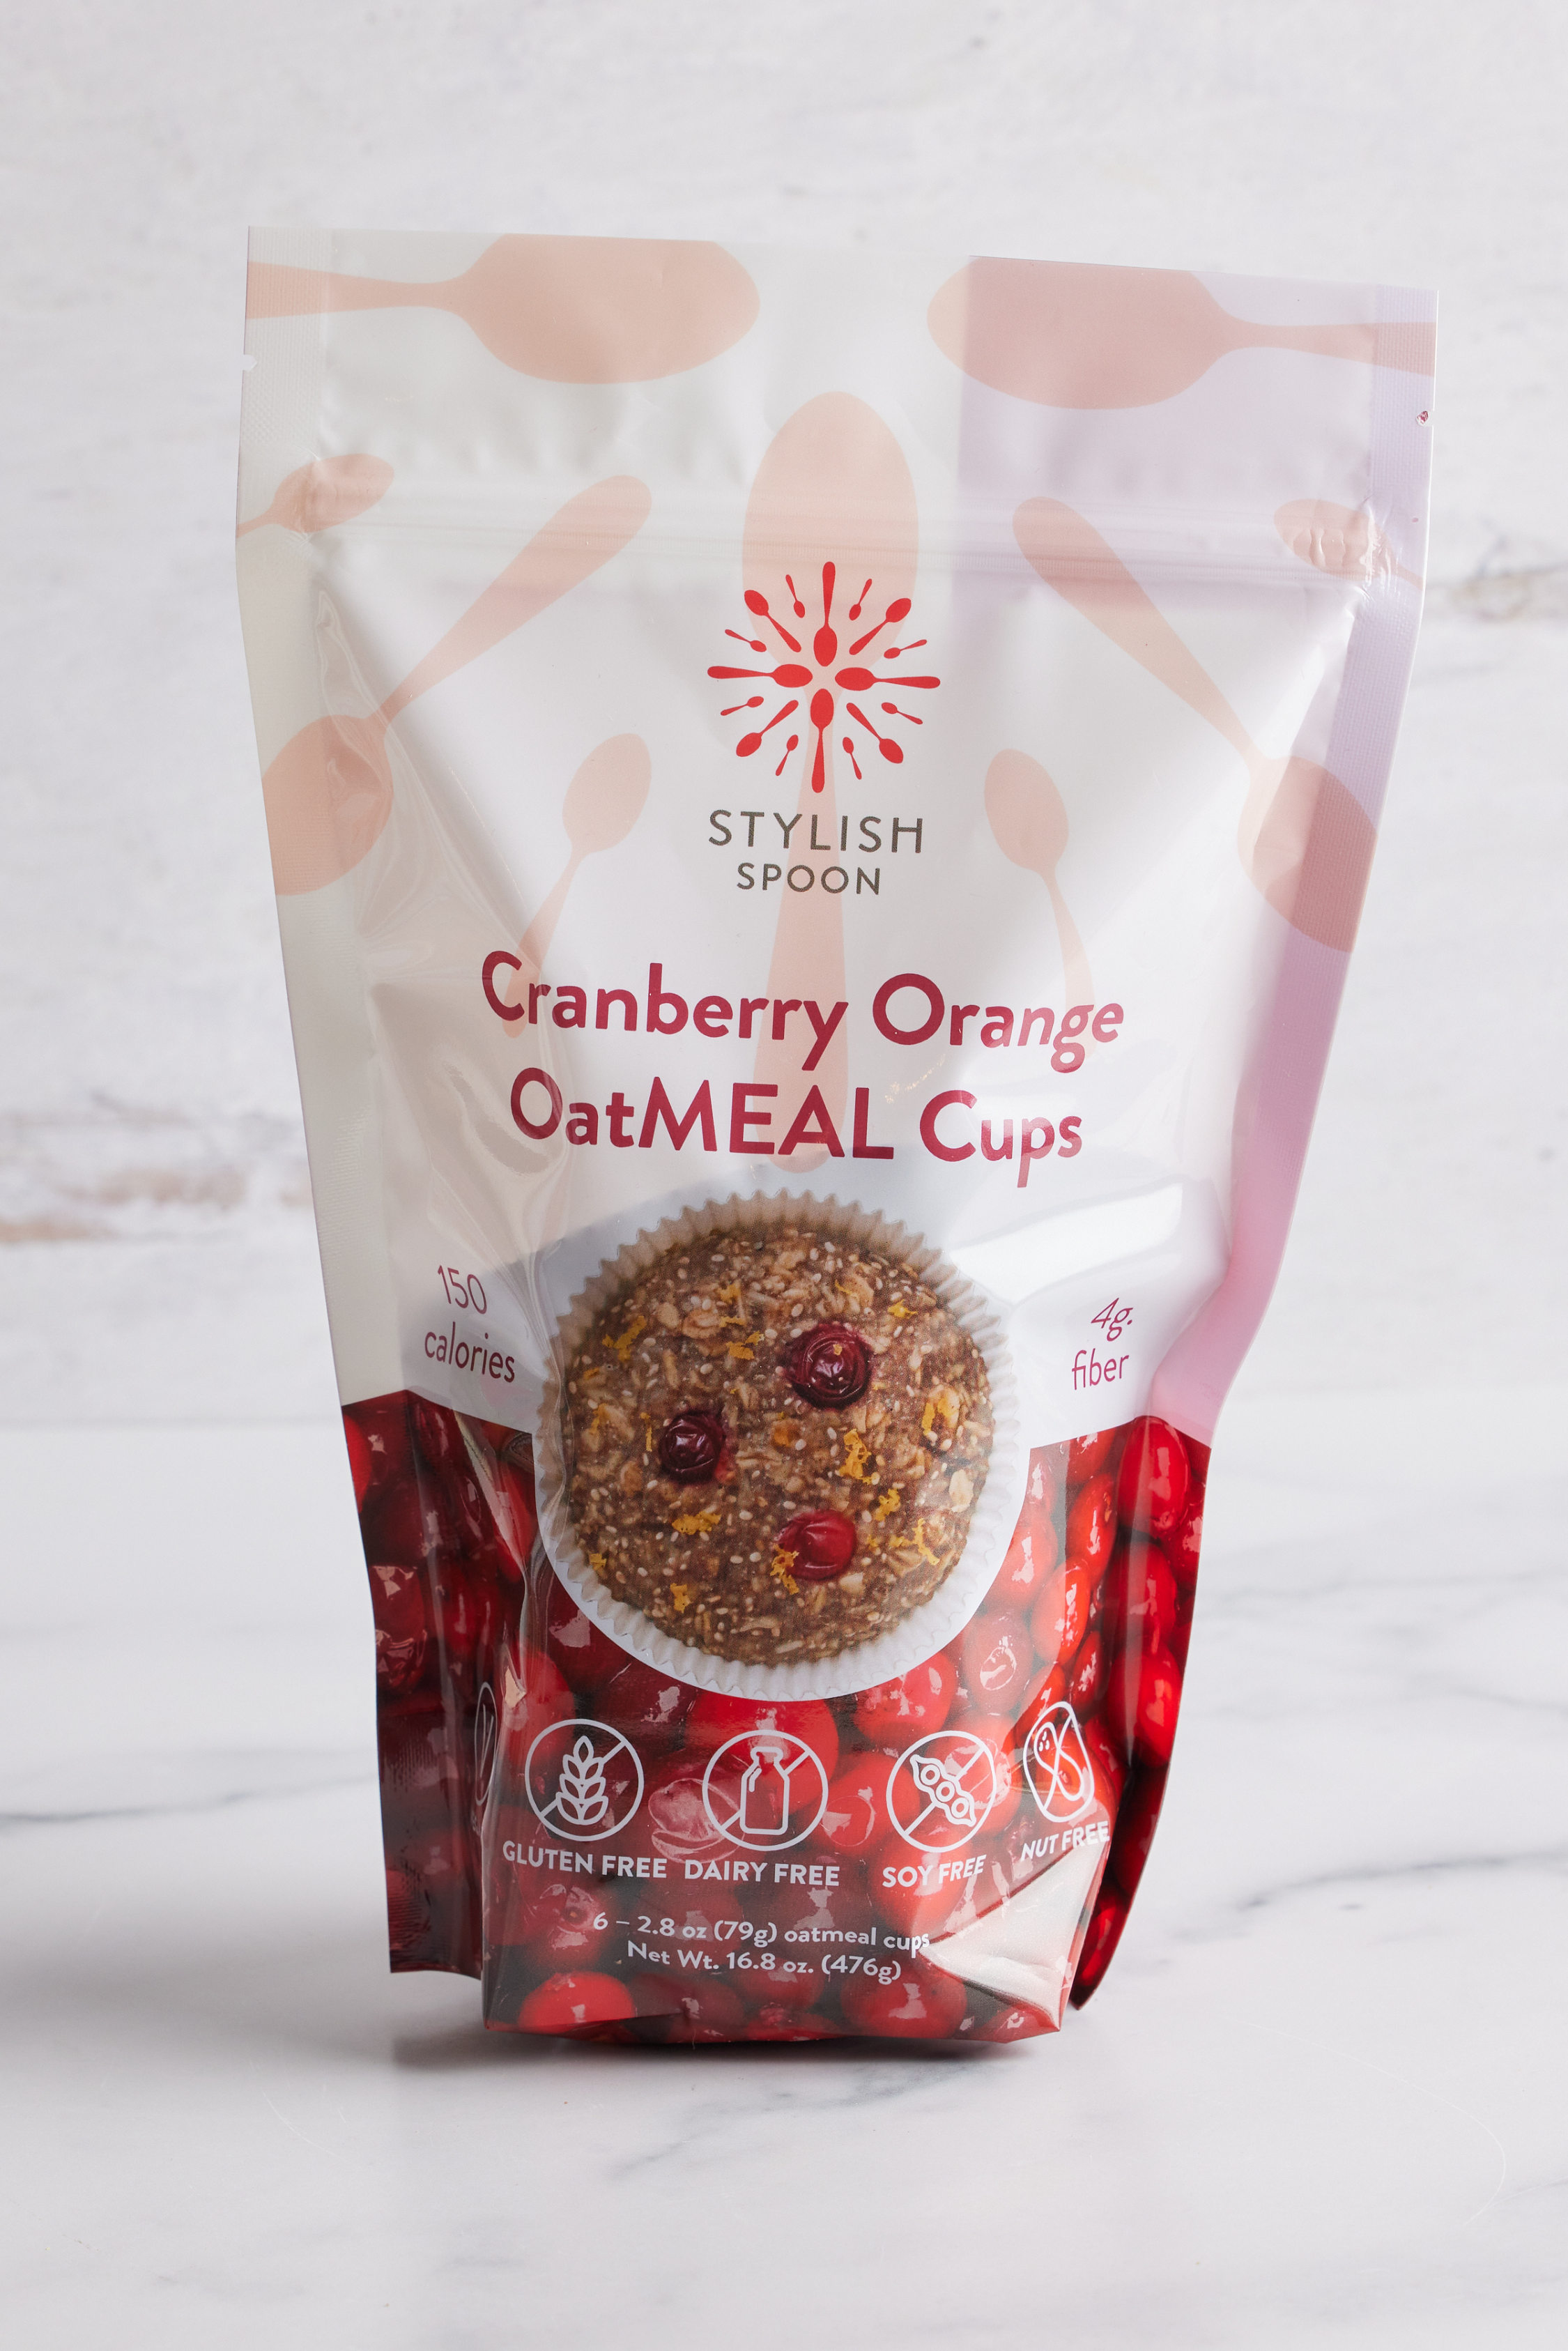 Cranberry + Orange OatMEAL Cups